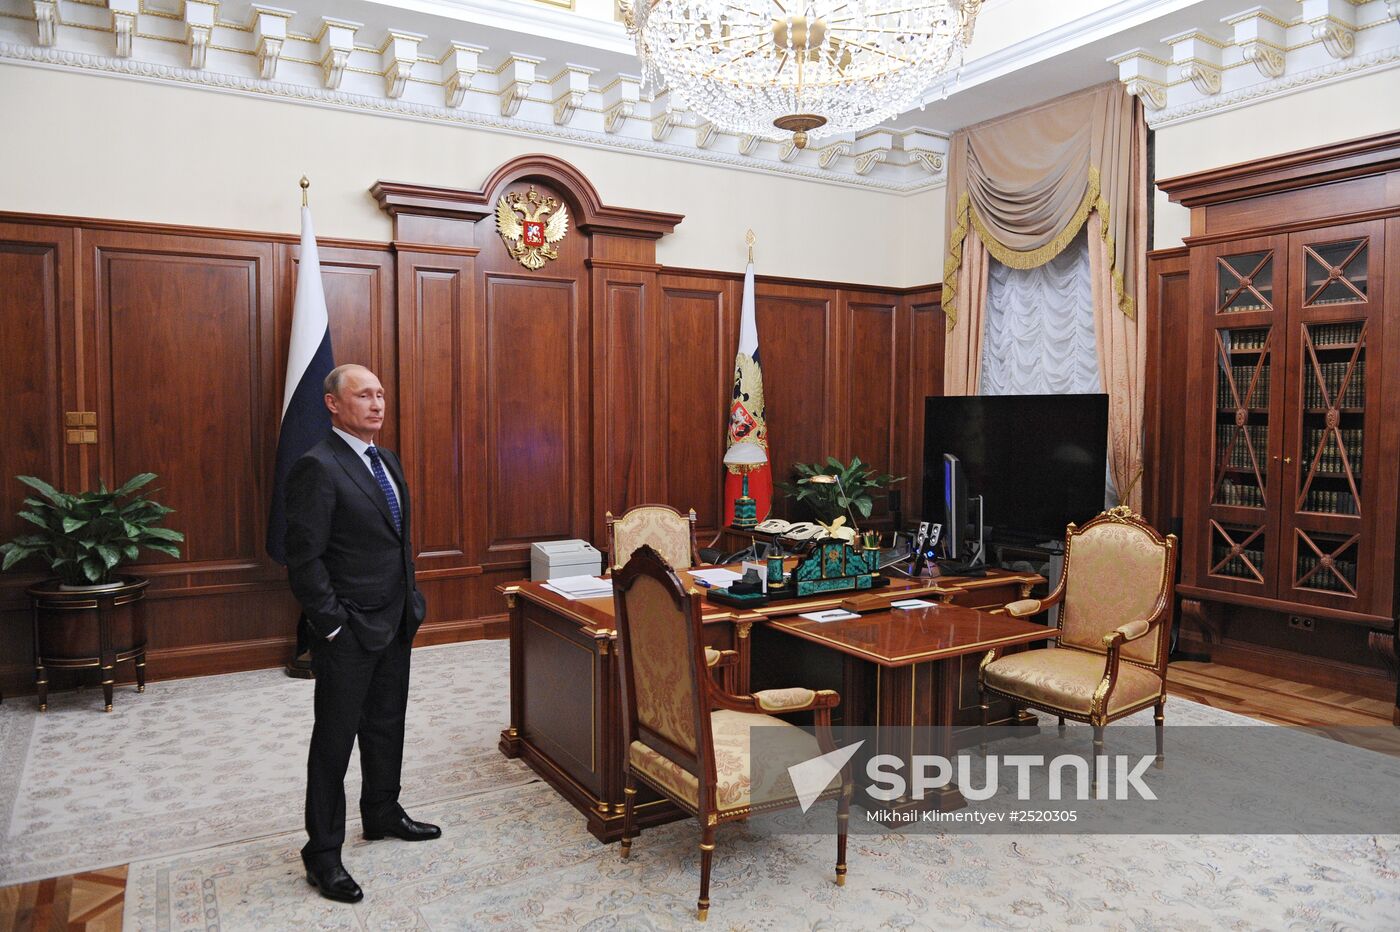 Vladimir Putin meets with Novatek chairman